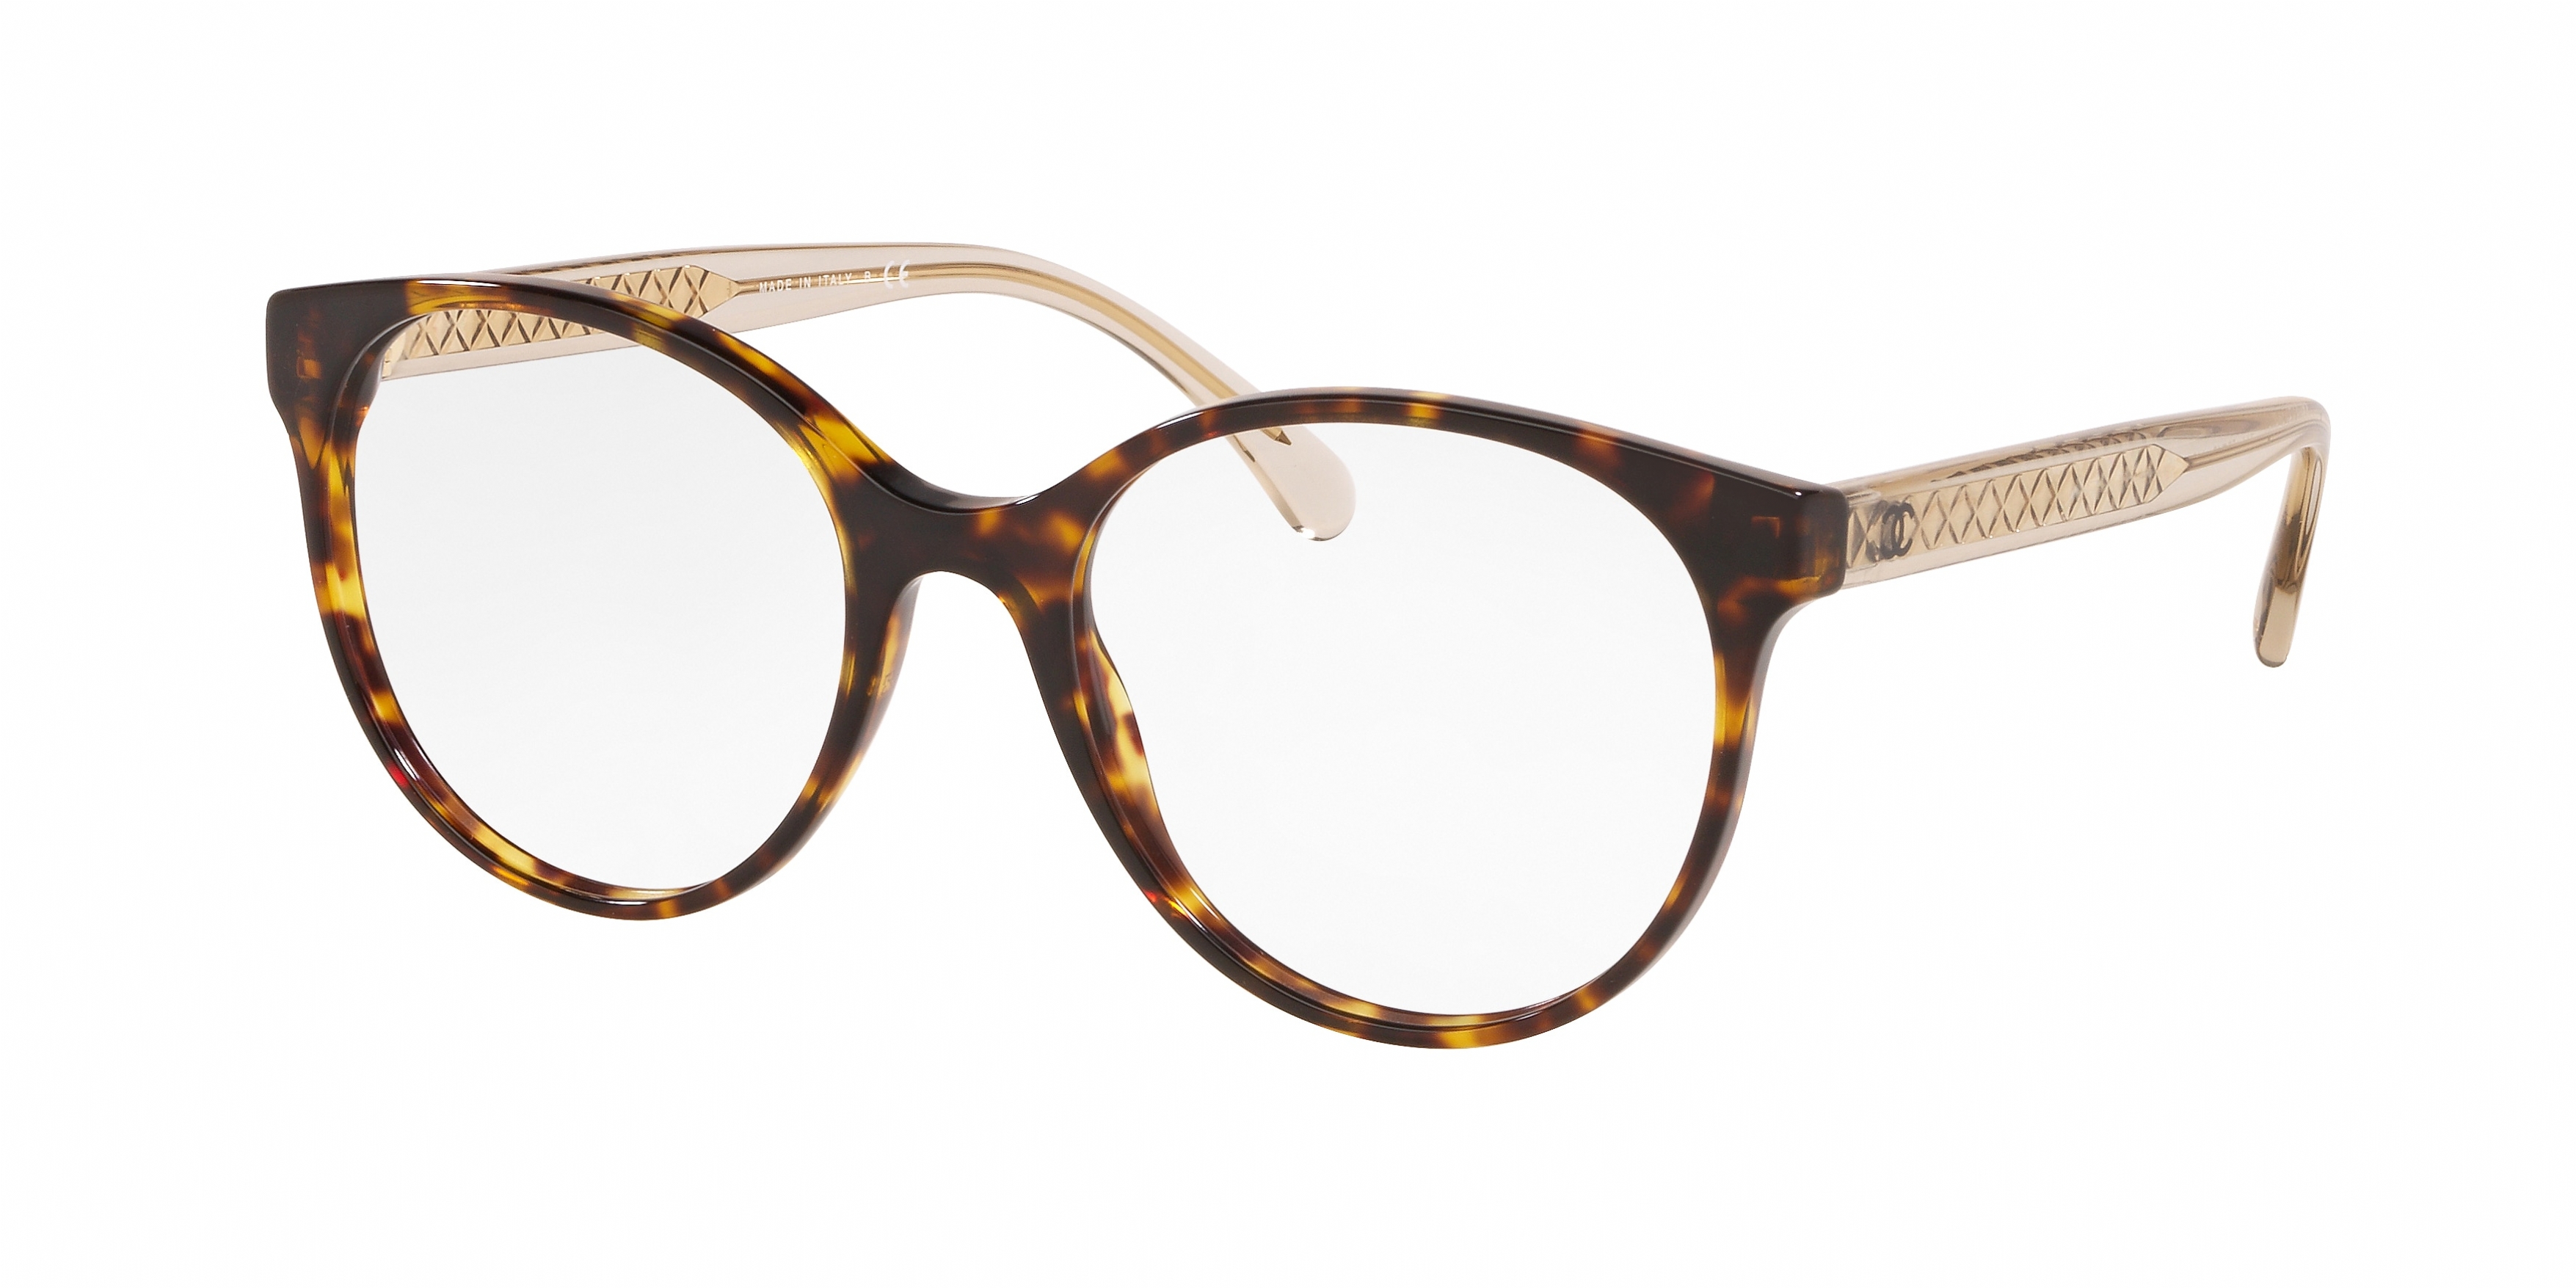 Chanel 3401 Eyeglasses